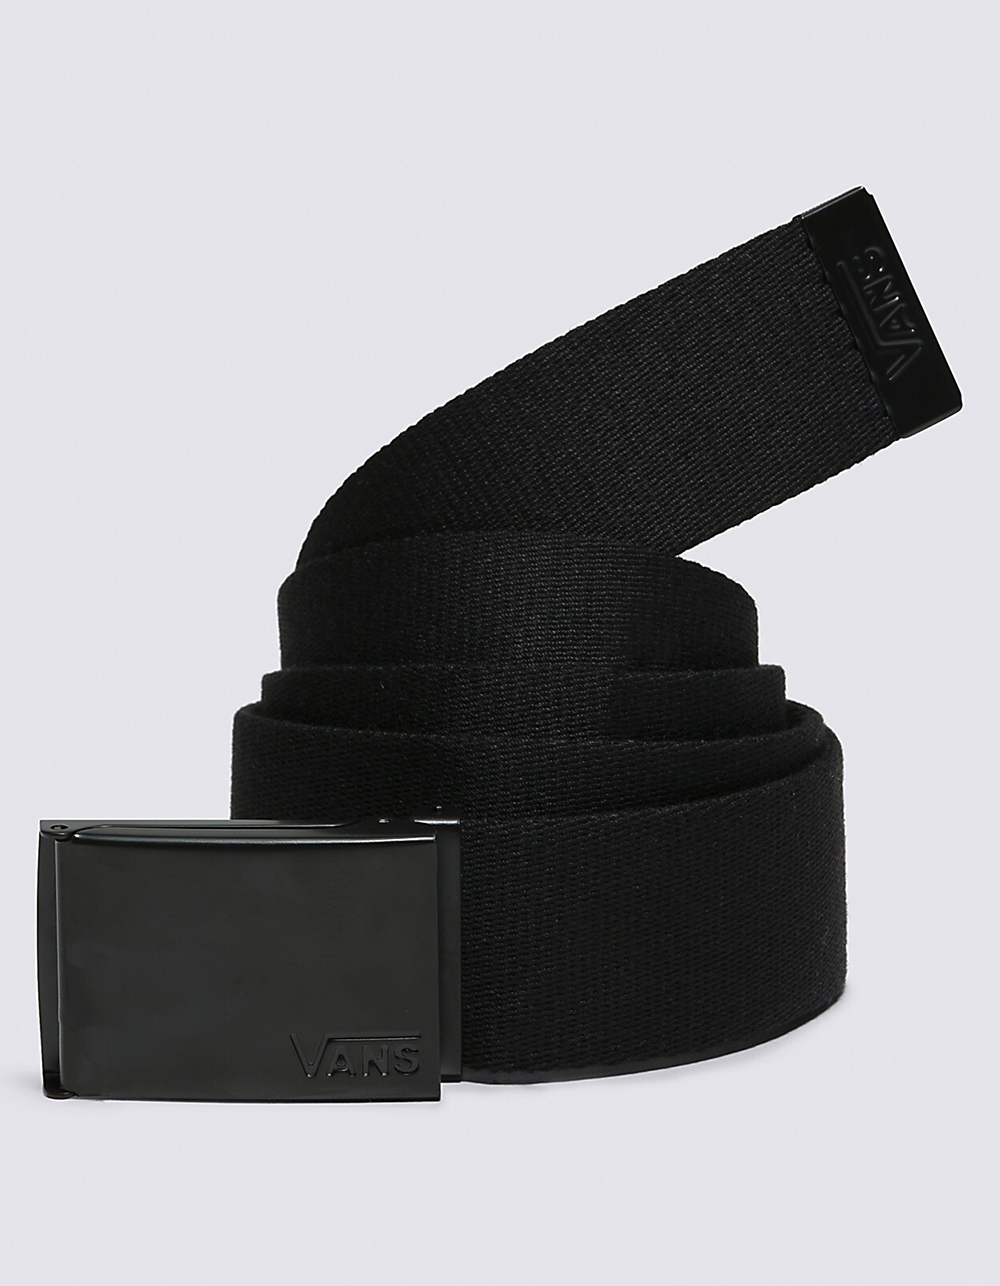 Men's Black Leather Belt - Mitchell